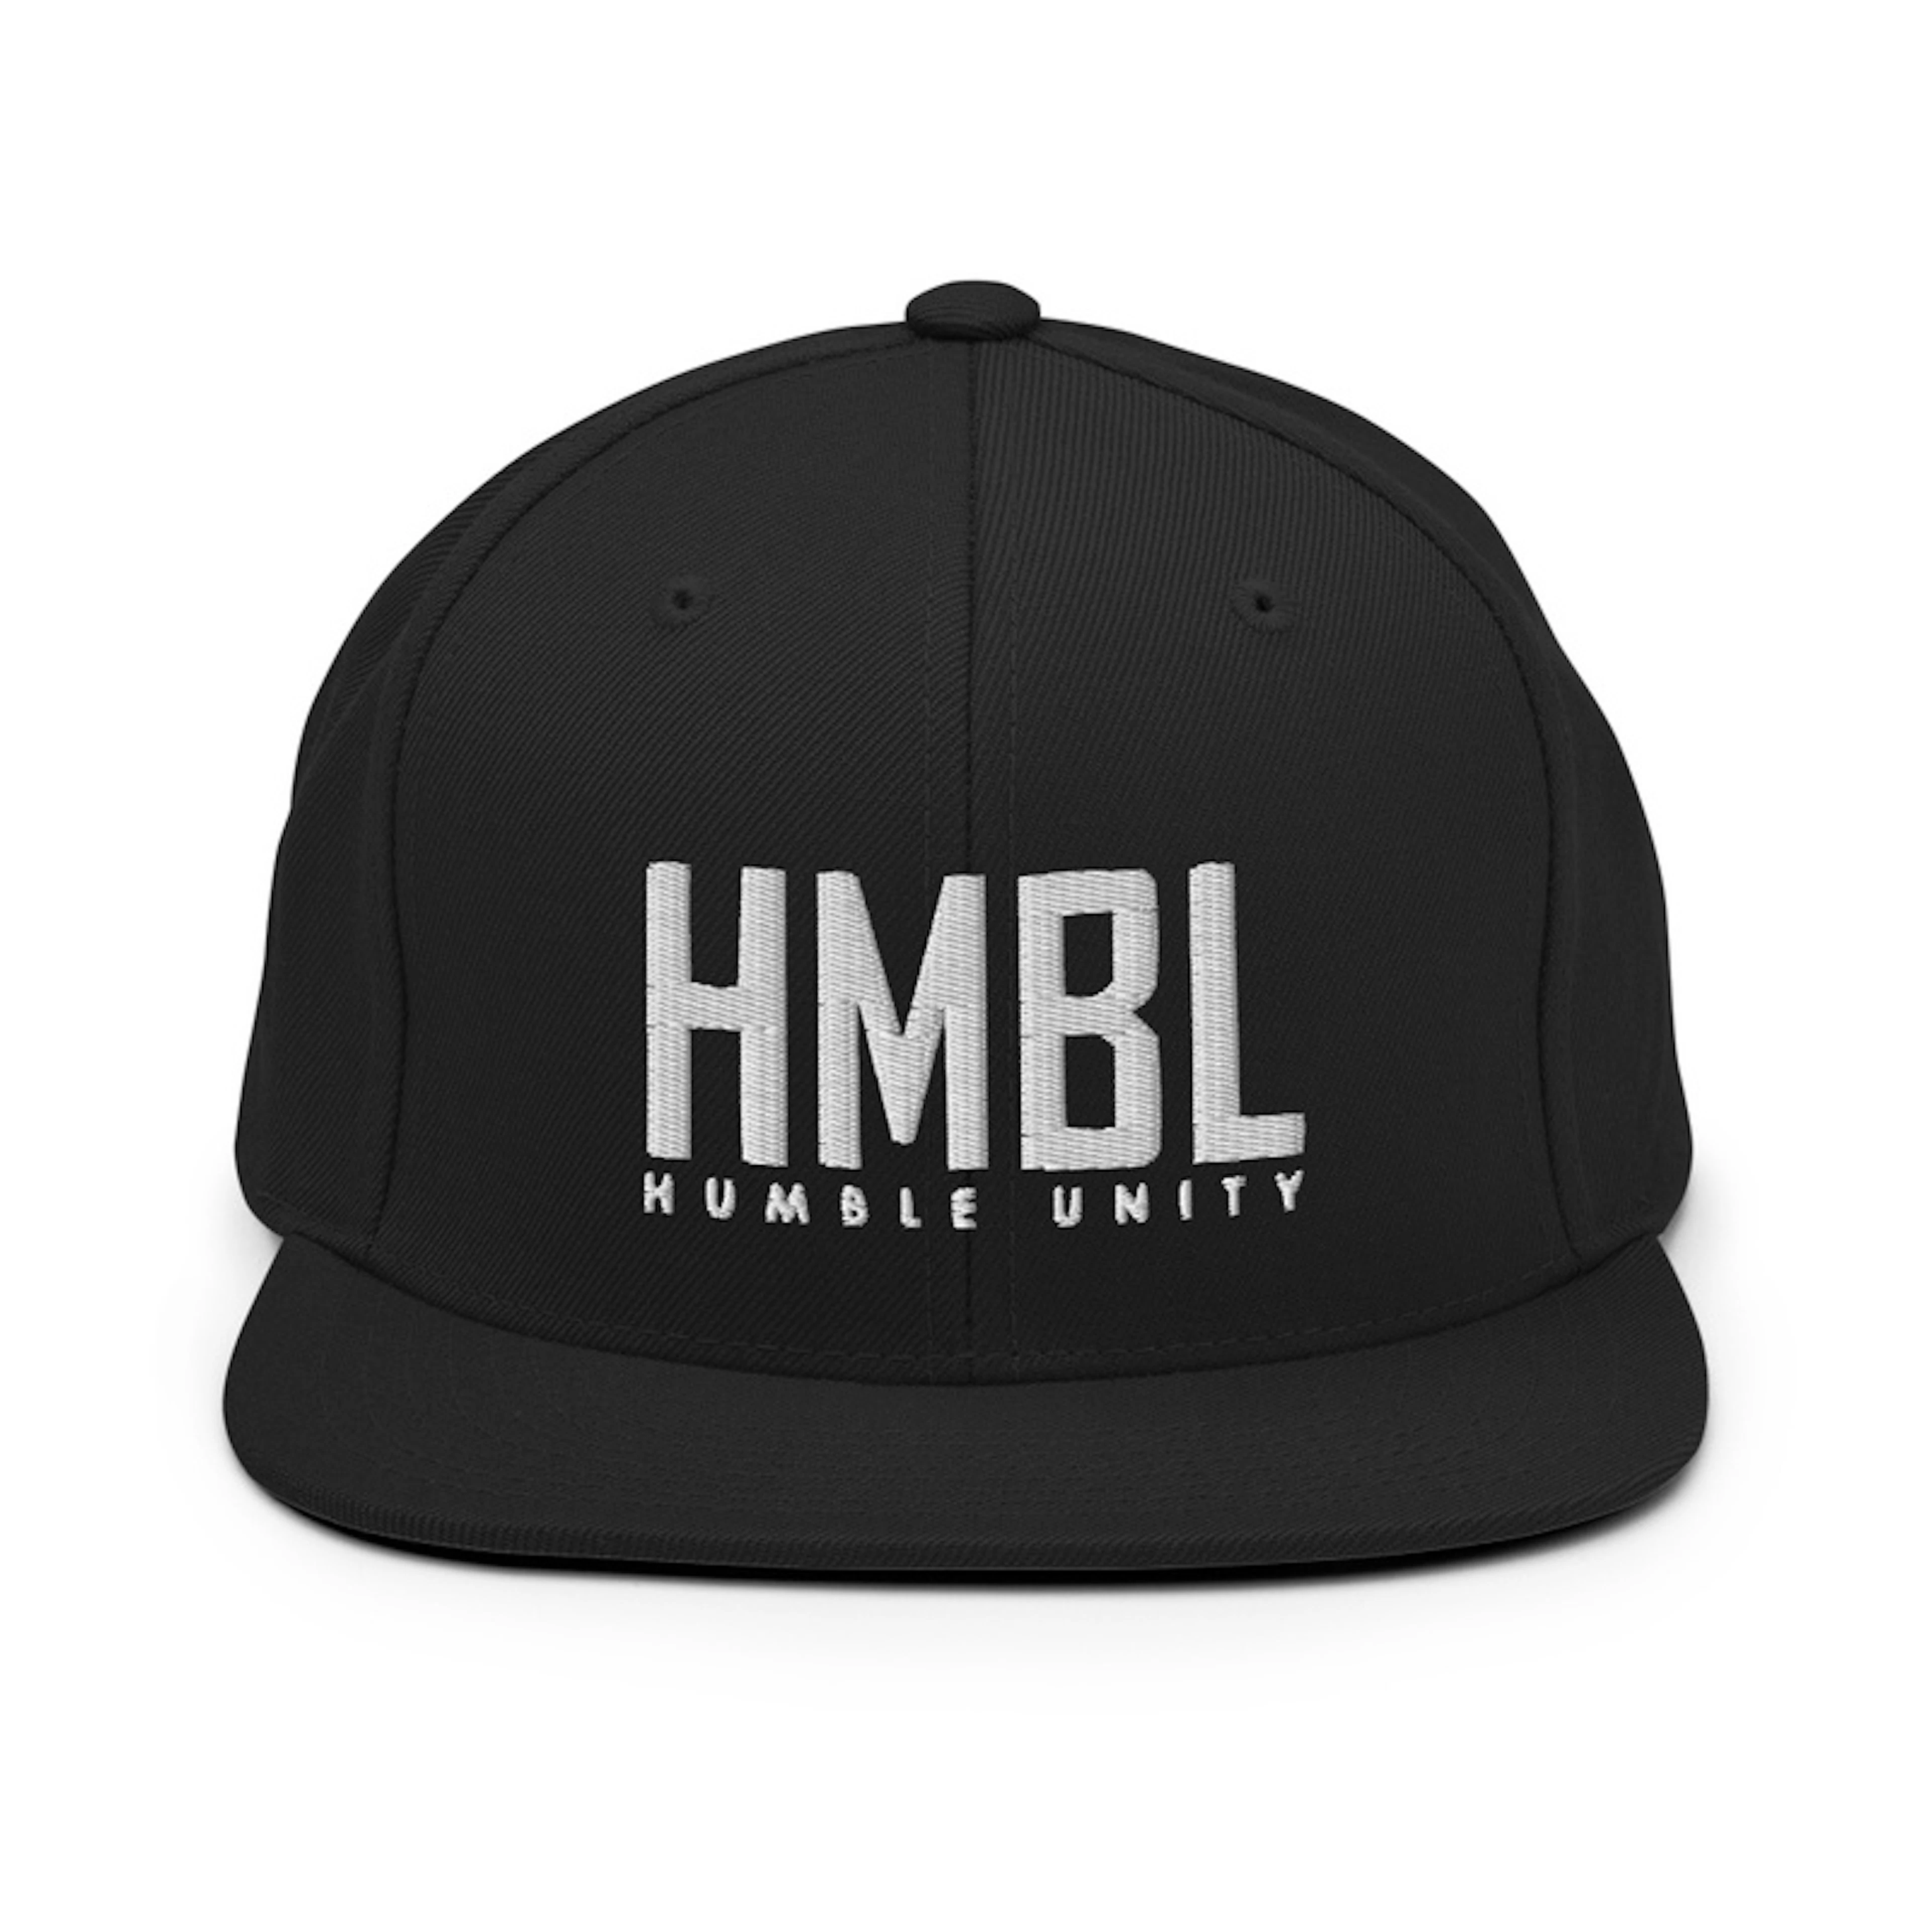 Humble Unity Snapback Hat